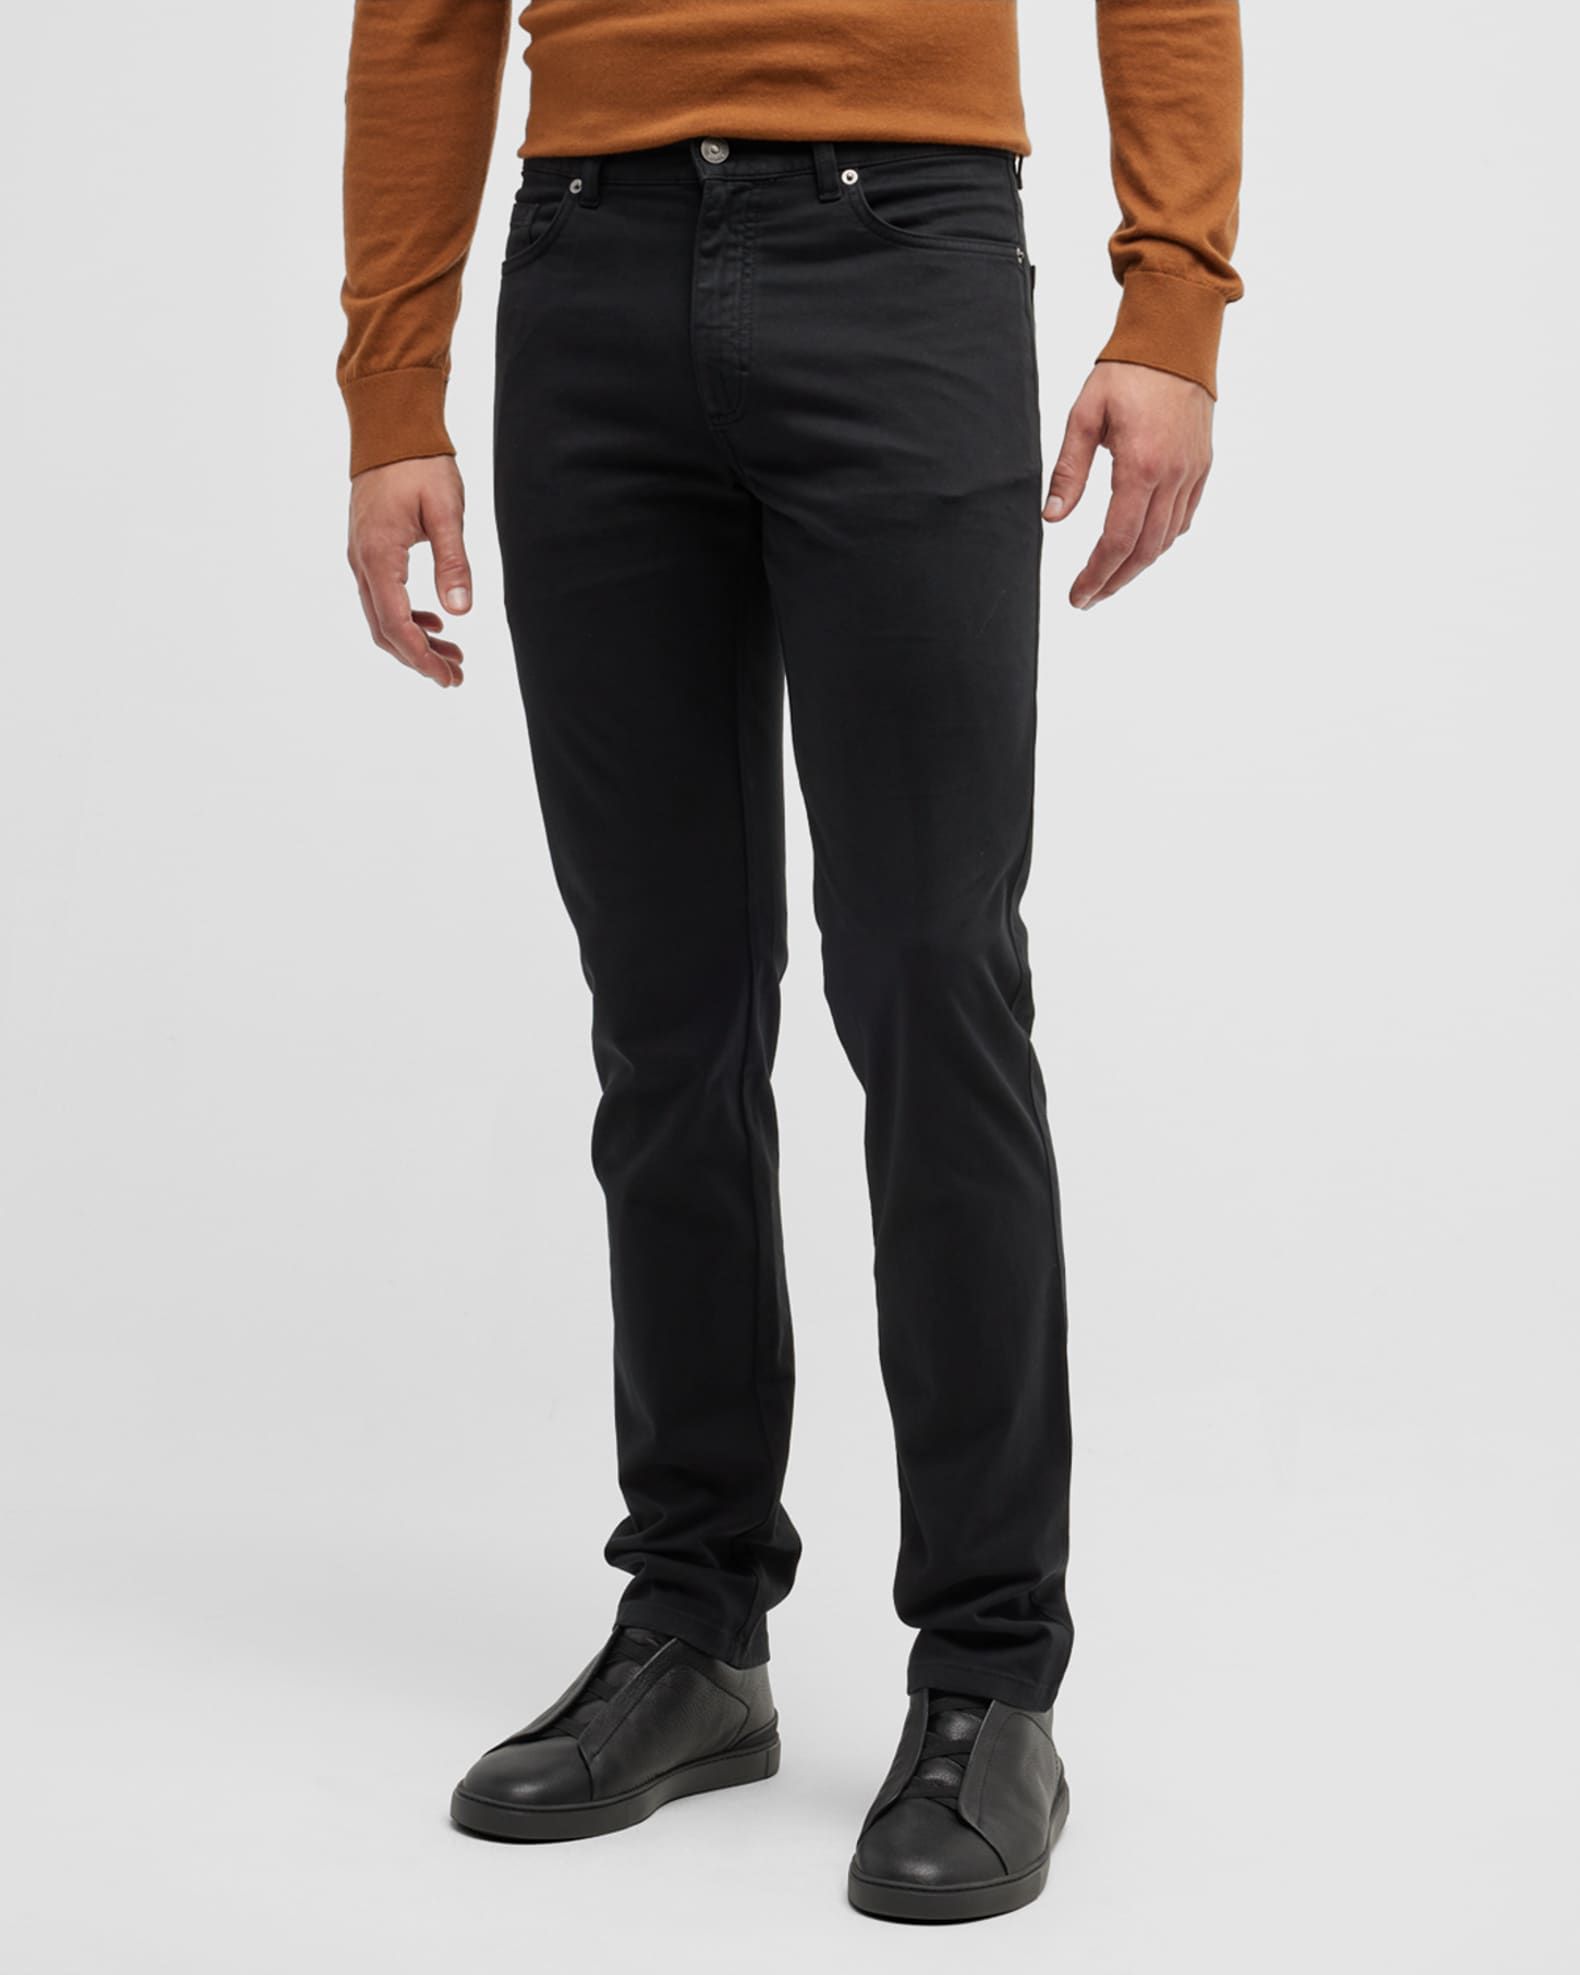 ZEGNA Men's 5-Pocket Stretch Pants | Neiman Marcus